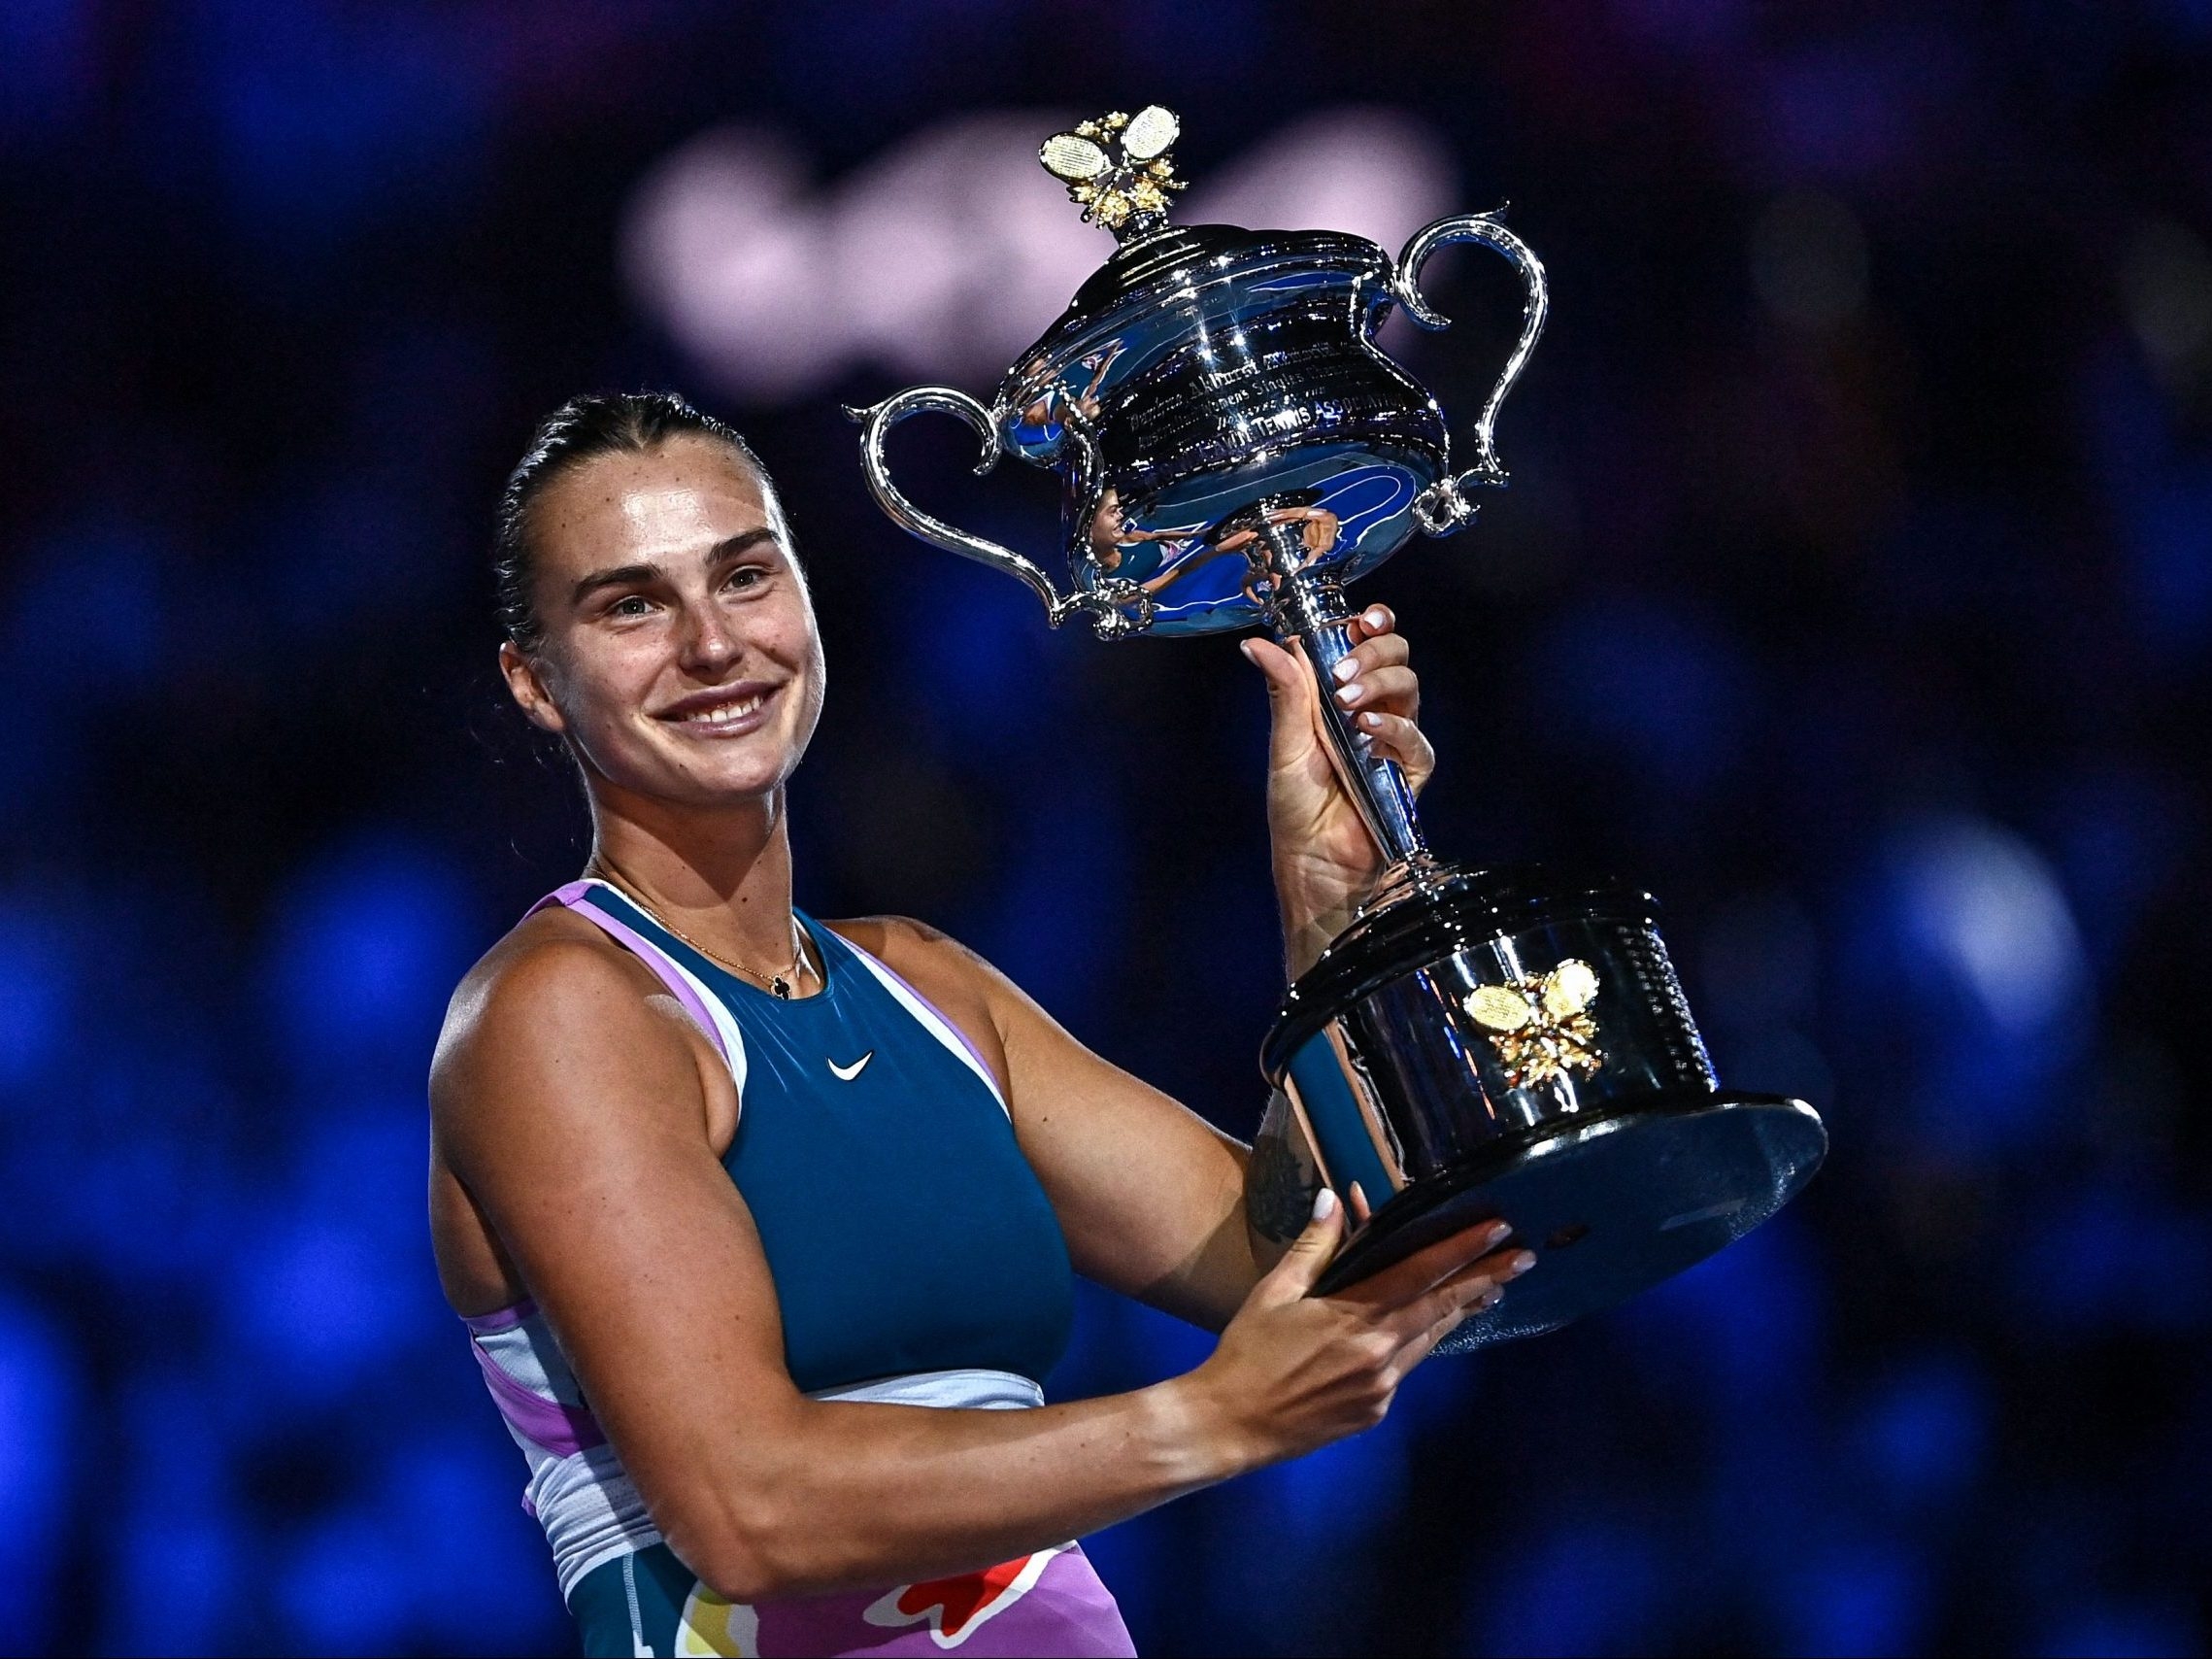 Aryna Sabalenka Powers To First Grand Slam Win At Australian Open